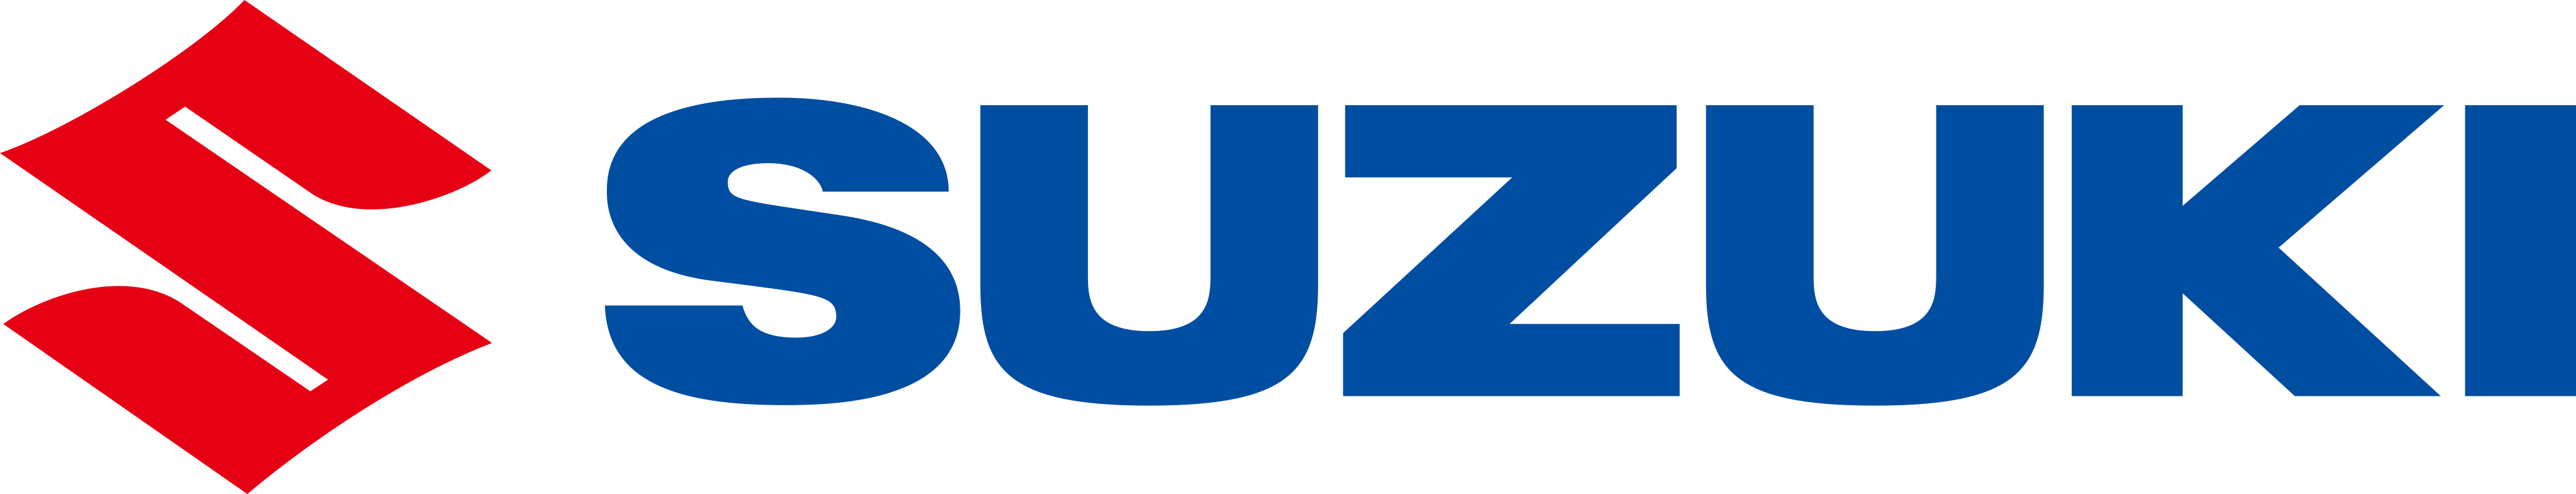 Maruti Imagen de PNG de suzuki logo